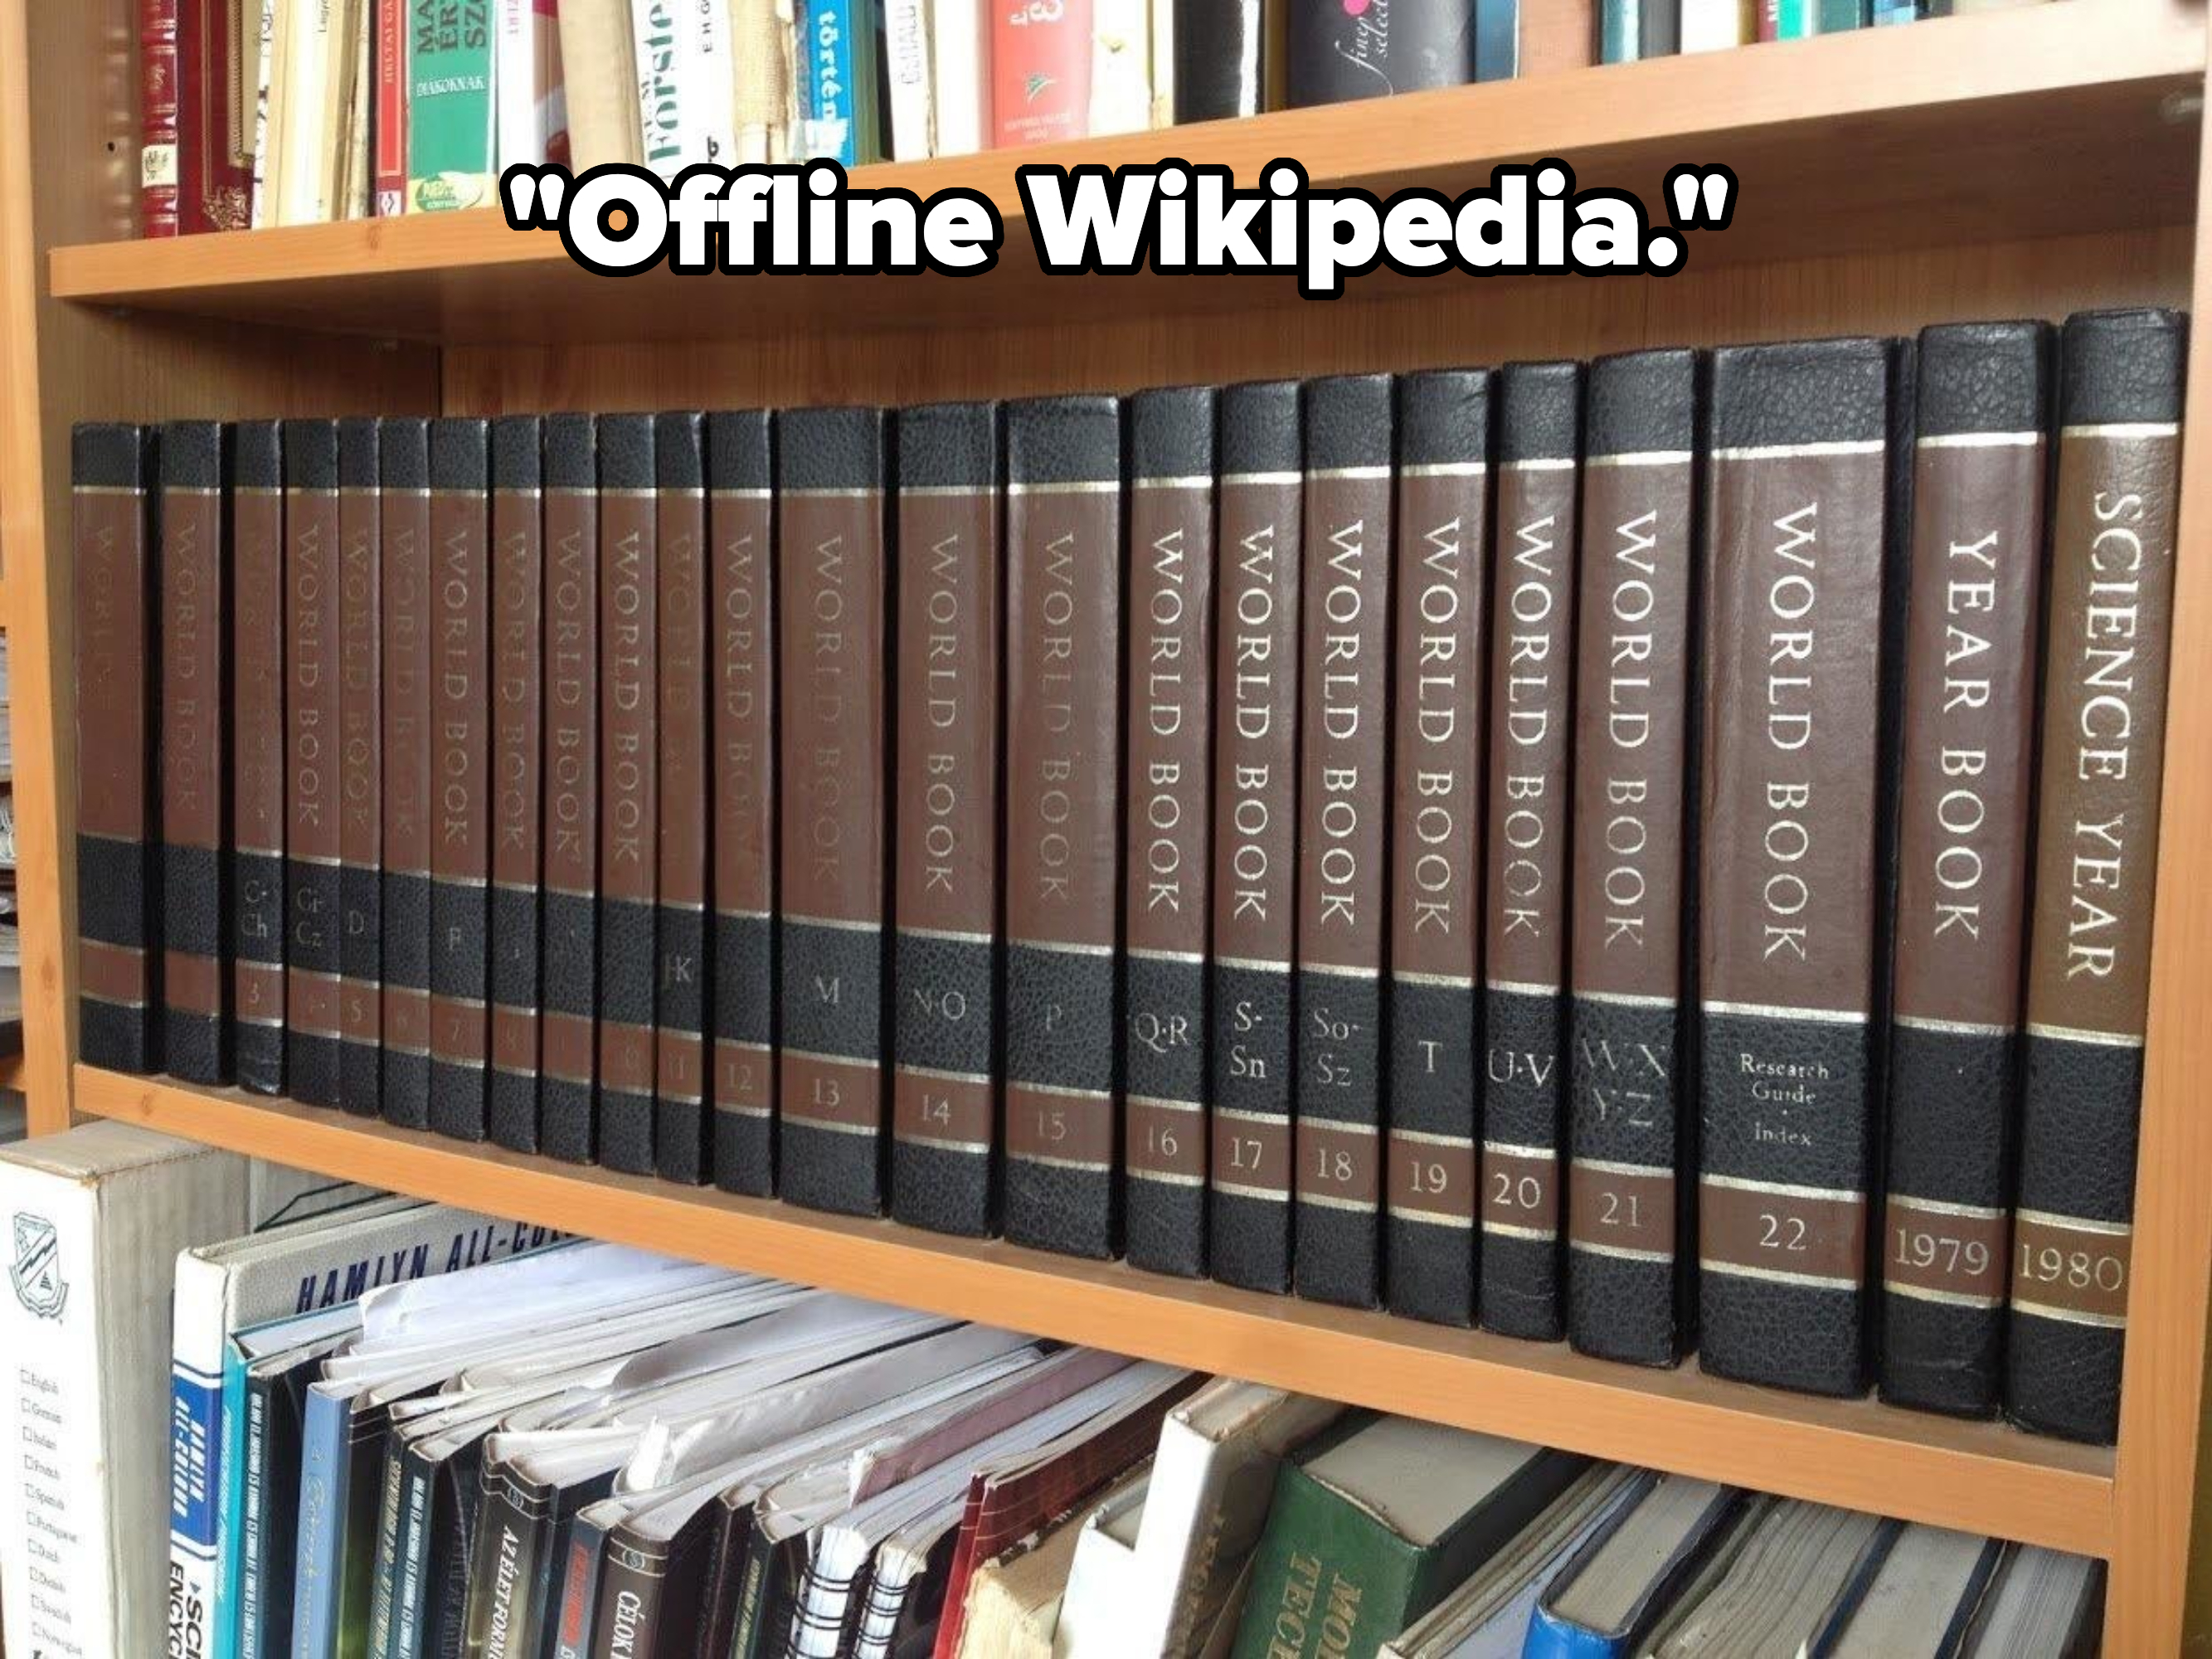 A shelf of World Book encyclopedias arranged alphabetically by volume